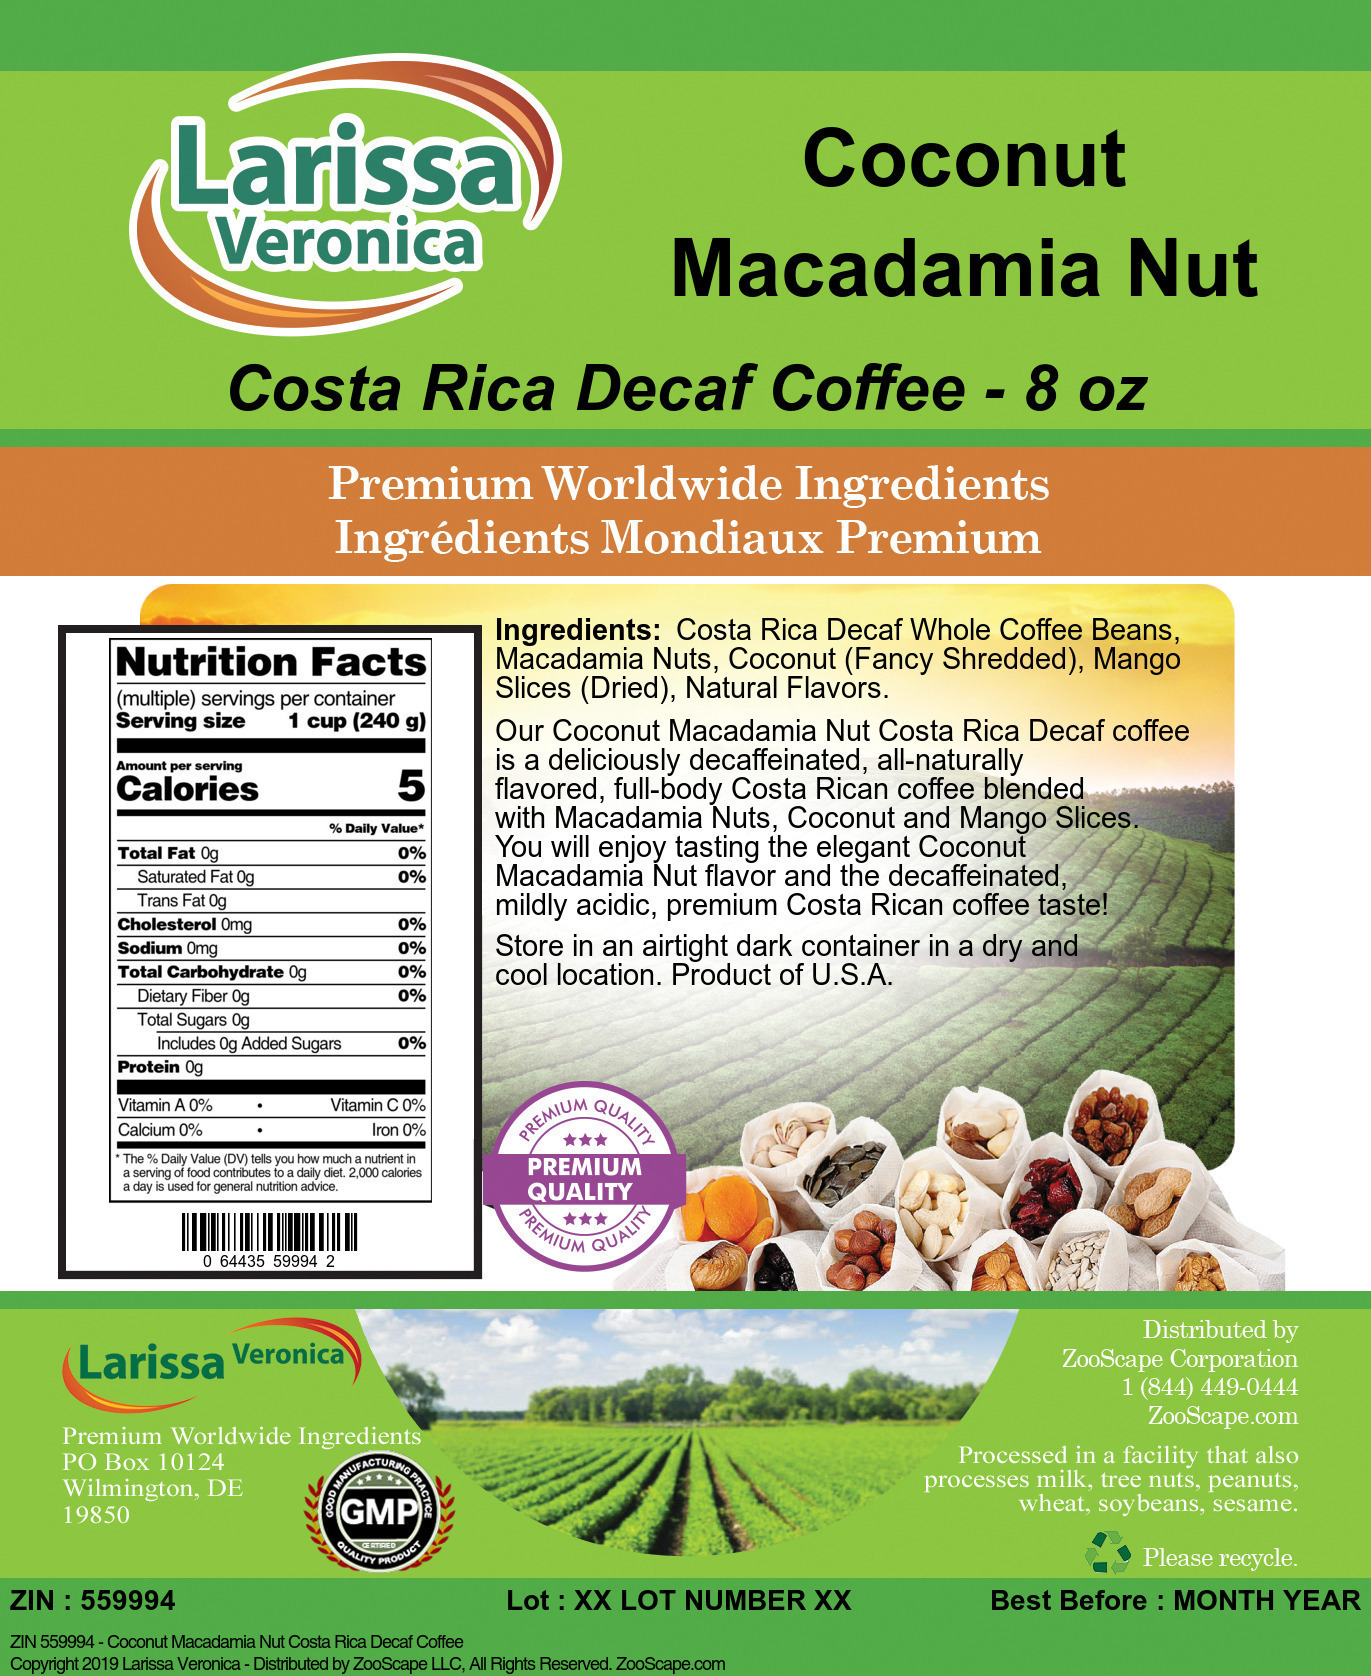 Coconut Macadamia Nut Costa Rica Decaf Coffee - Label